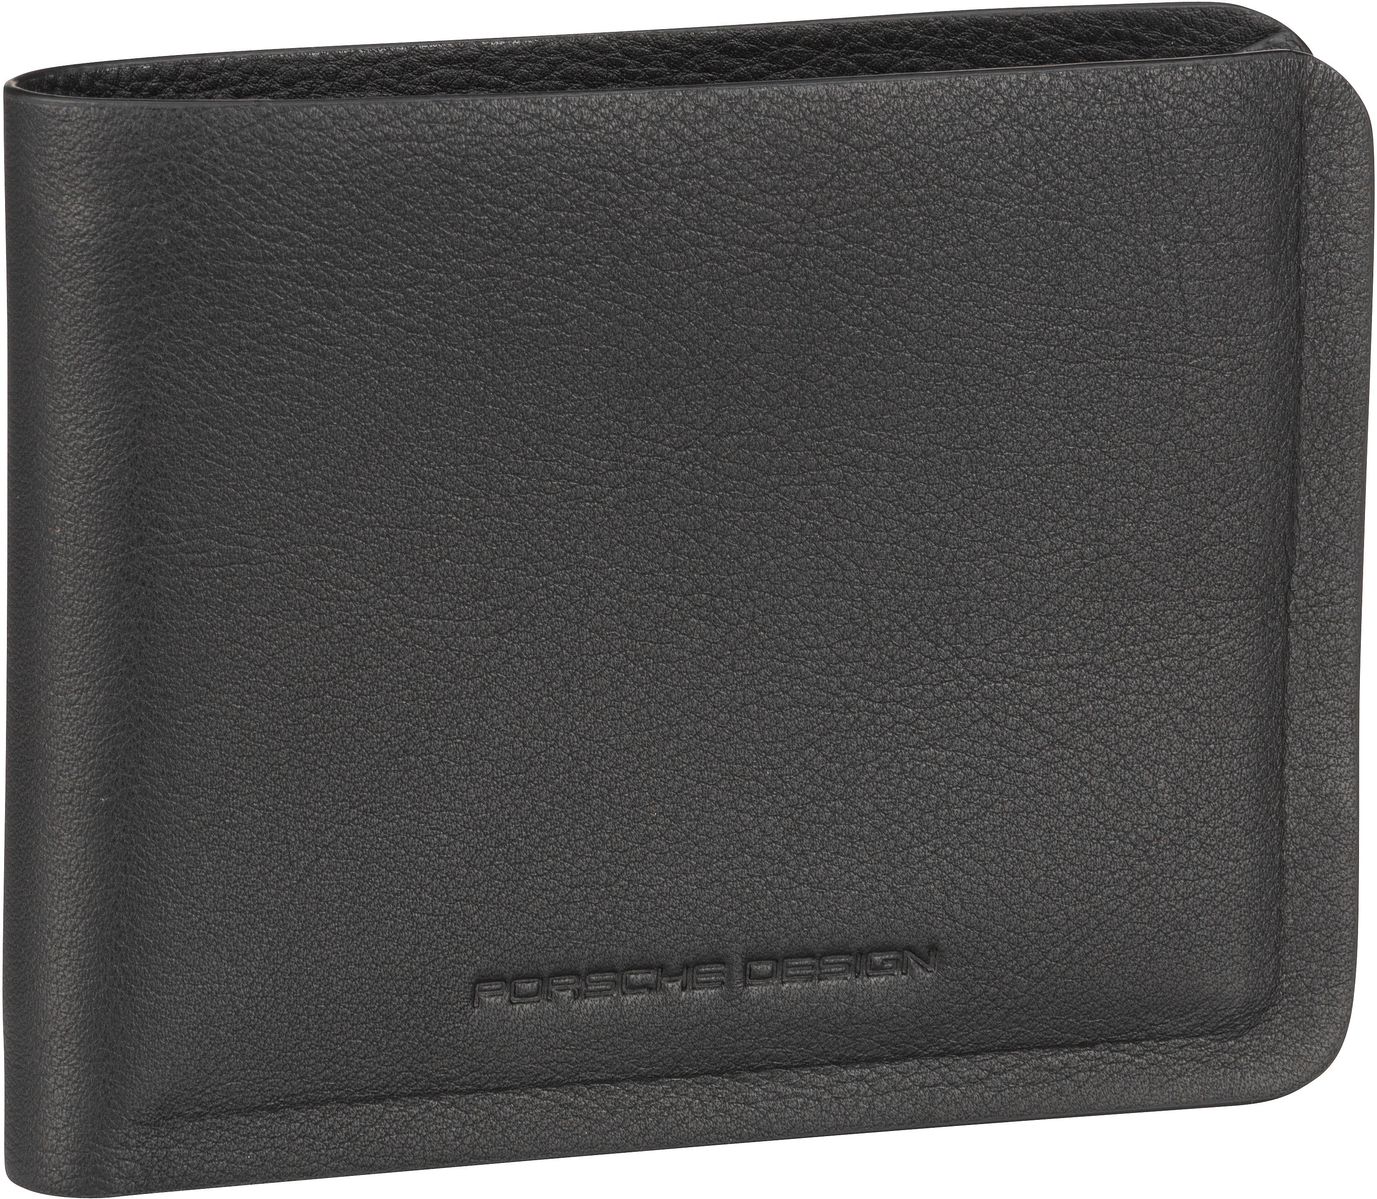 Porsche Design Seamless Wallet Billfold S - Black